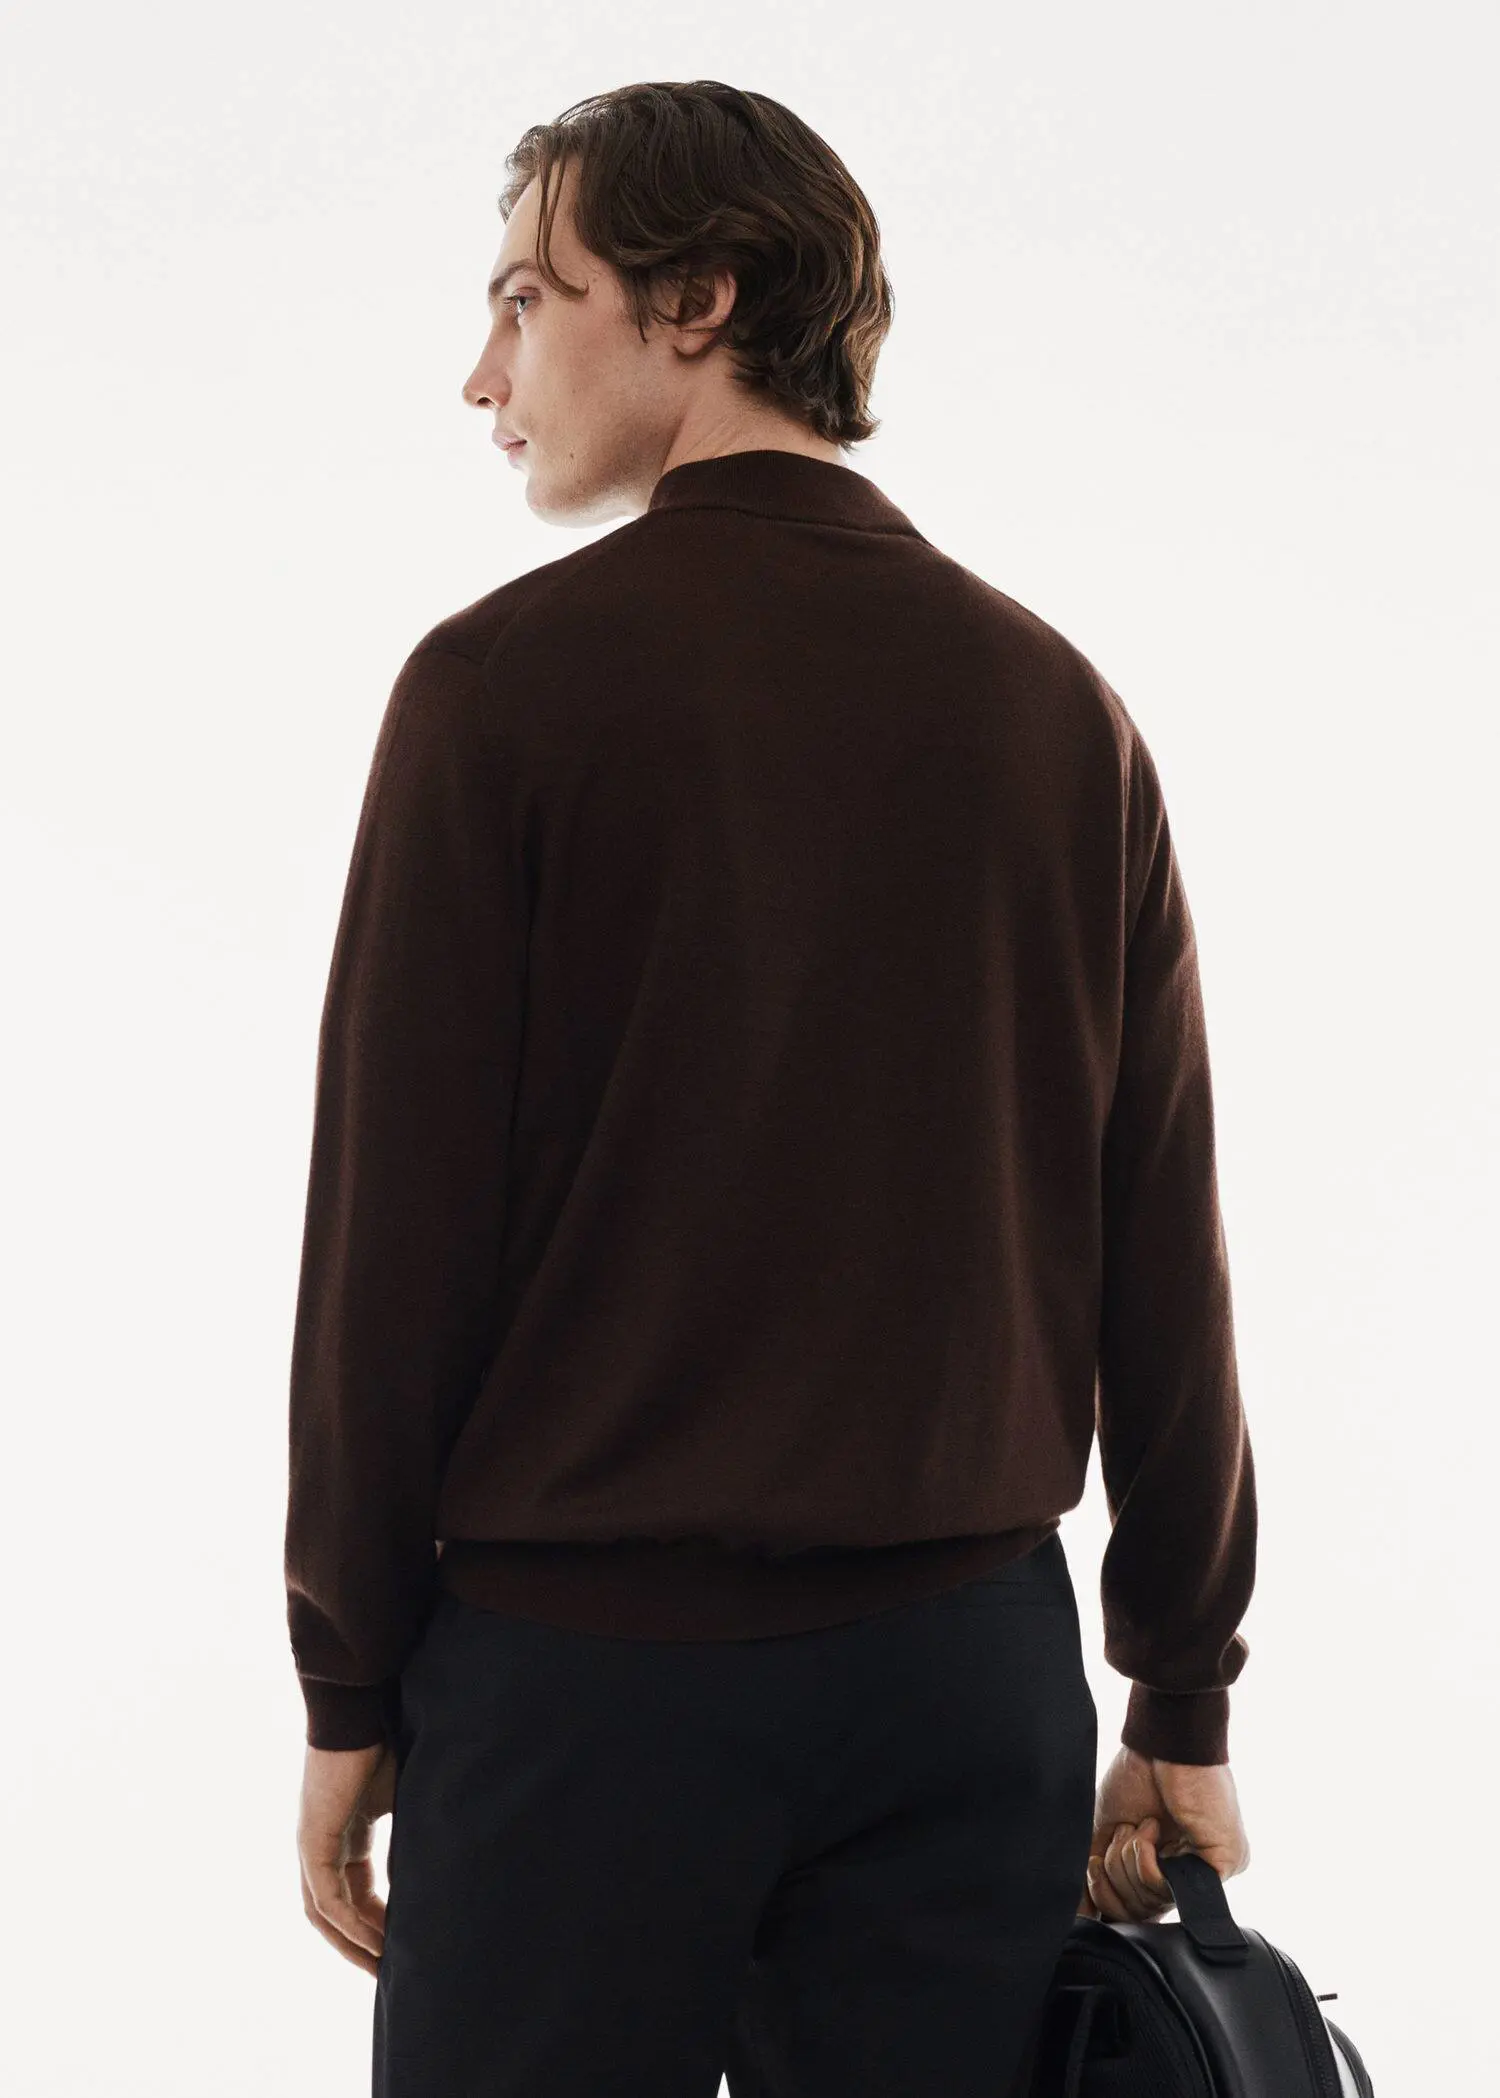 Mango 100% merino wool sweater with zip collar. 3